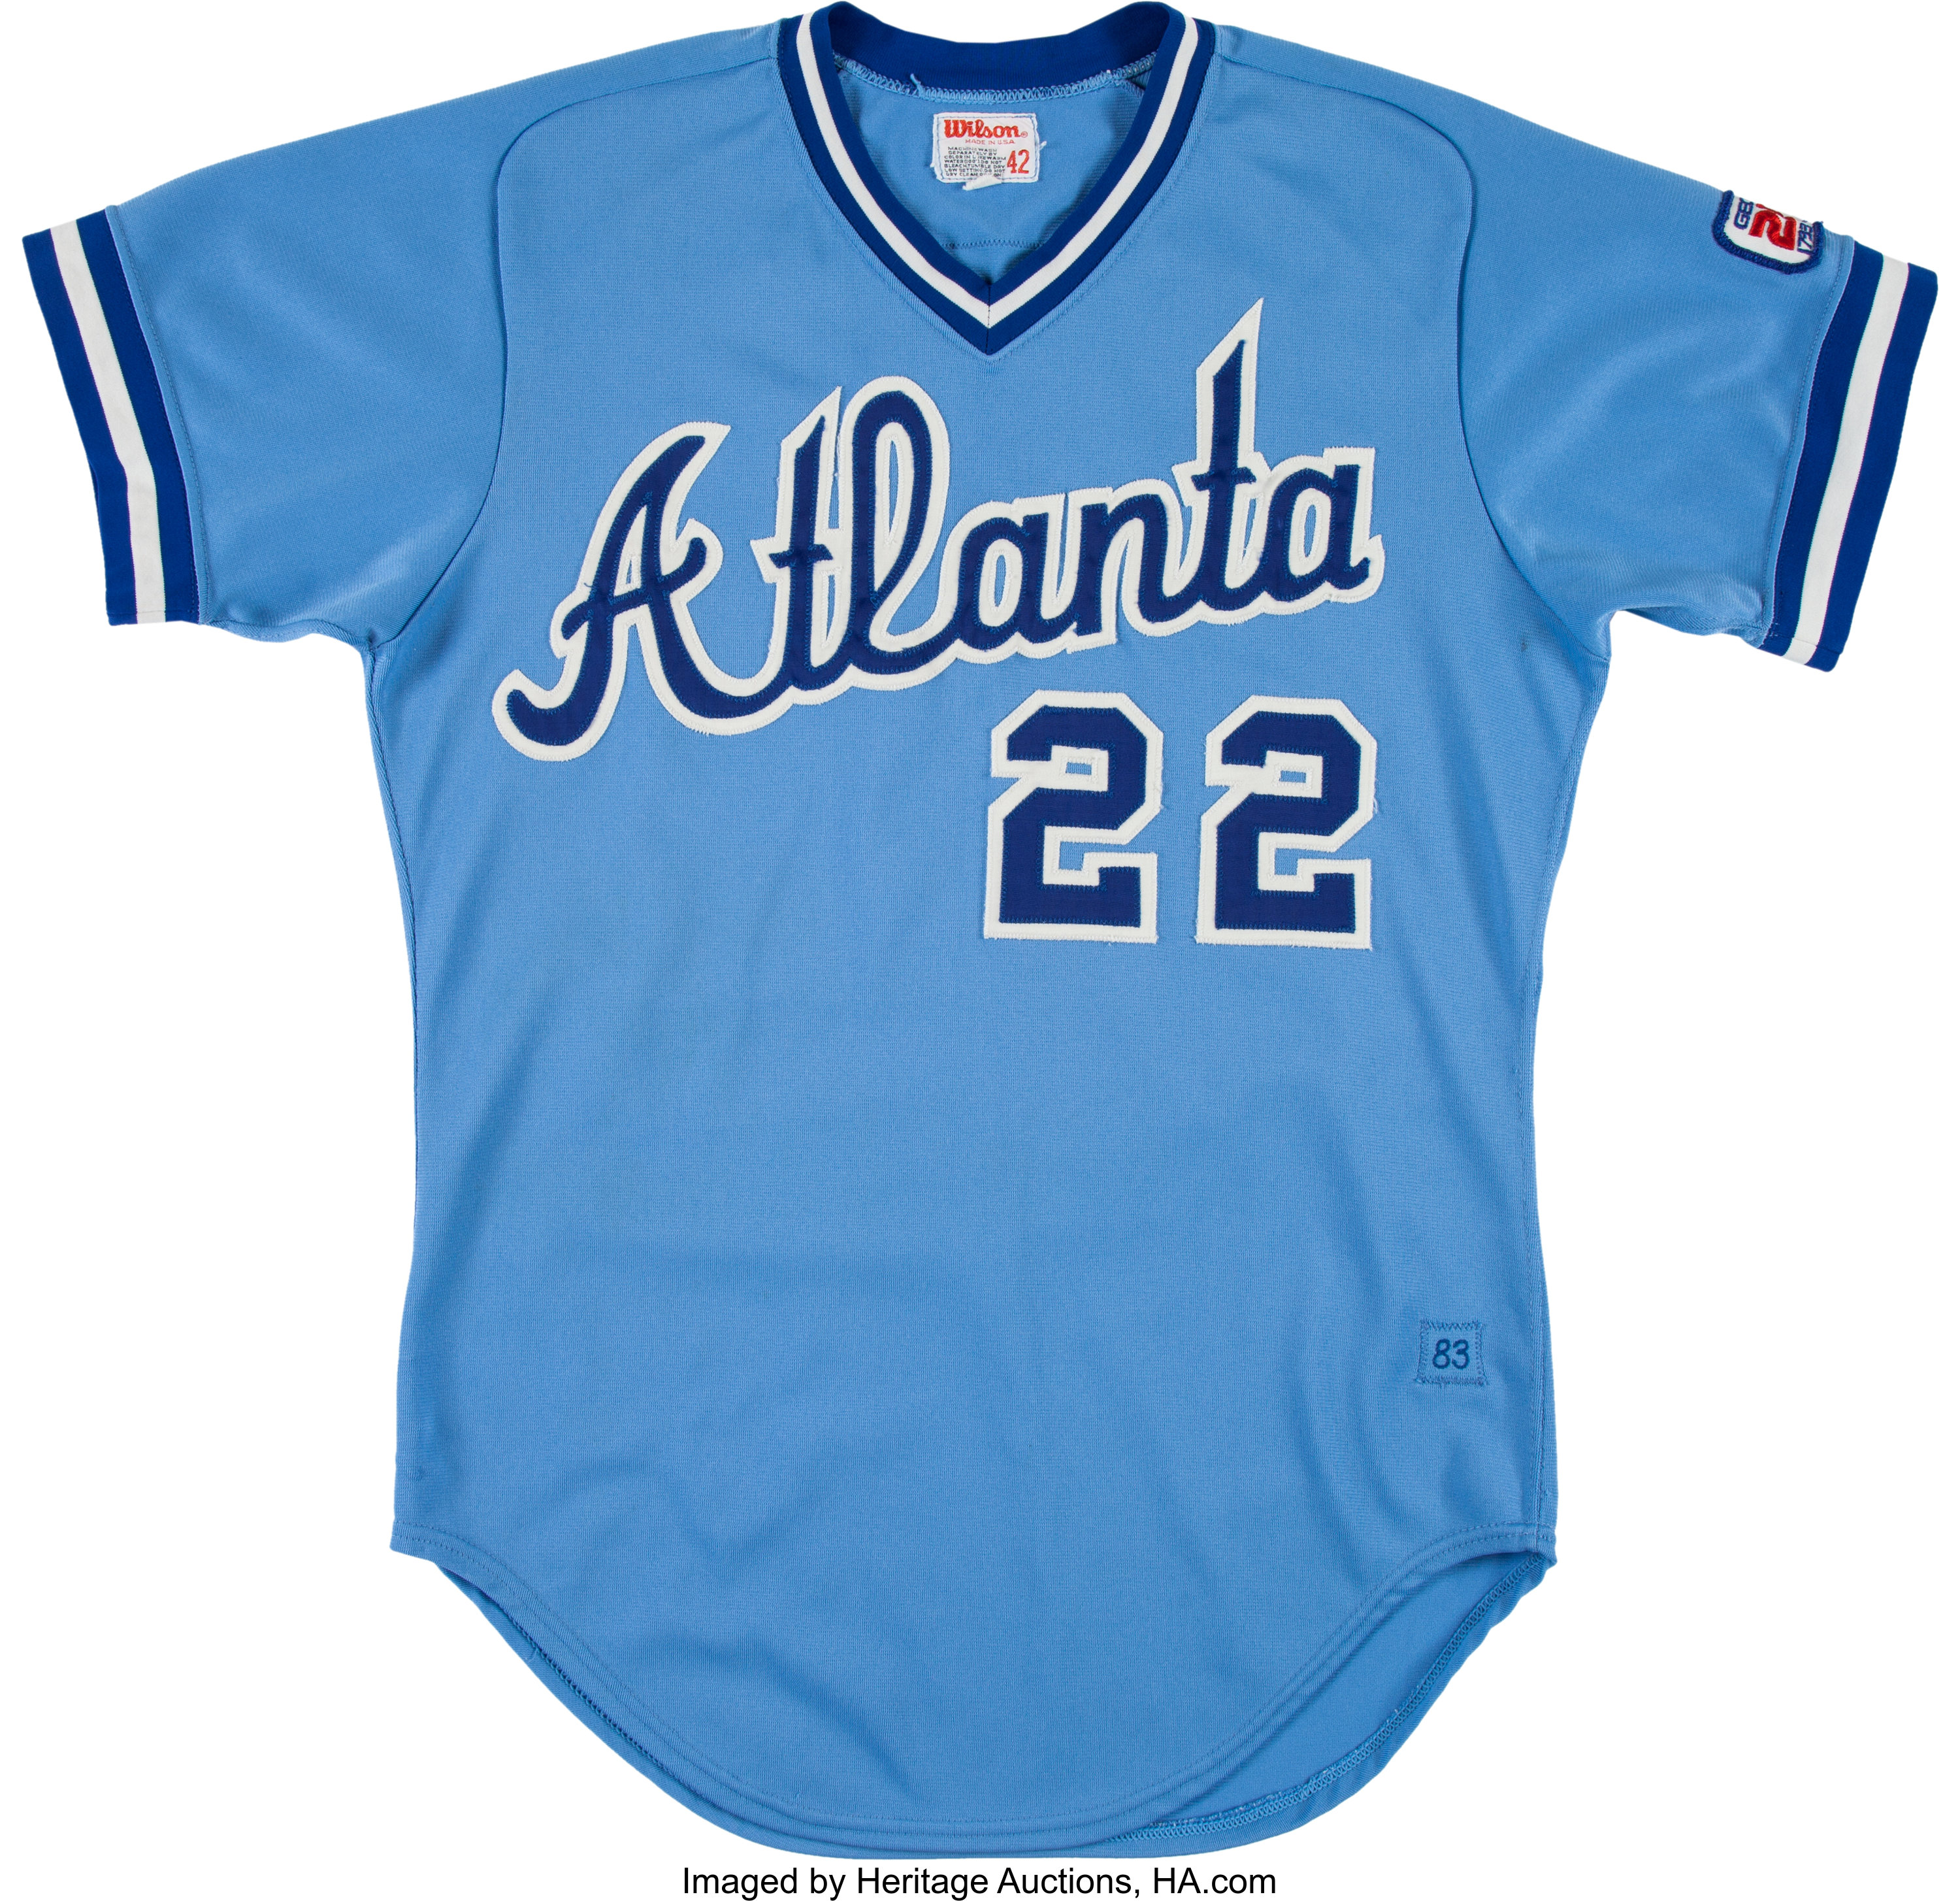 Braves Game Worn/Team Issued Jerseys For Sale/Trade : r/baseballunis